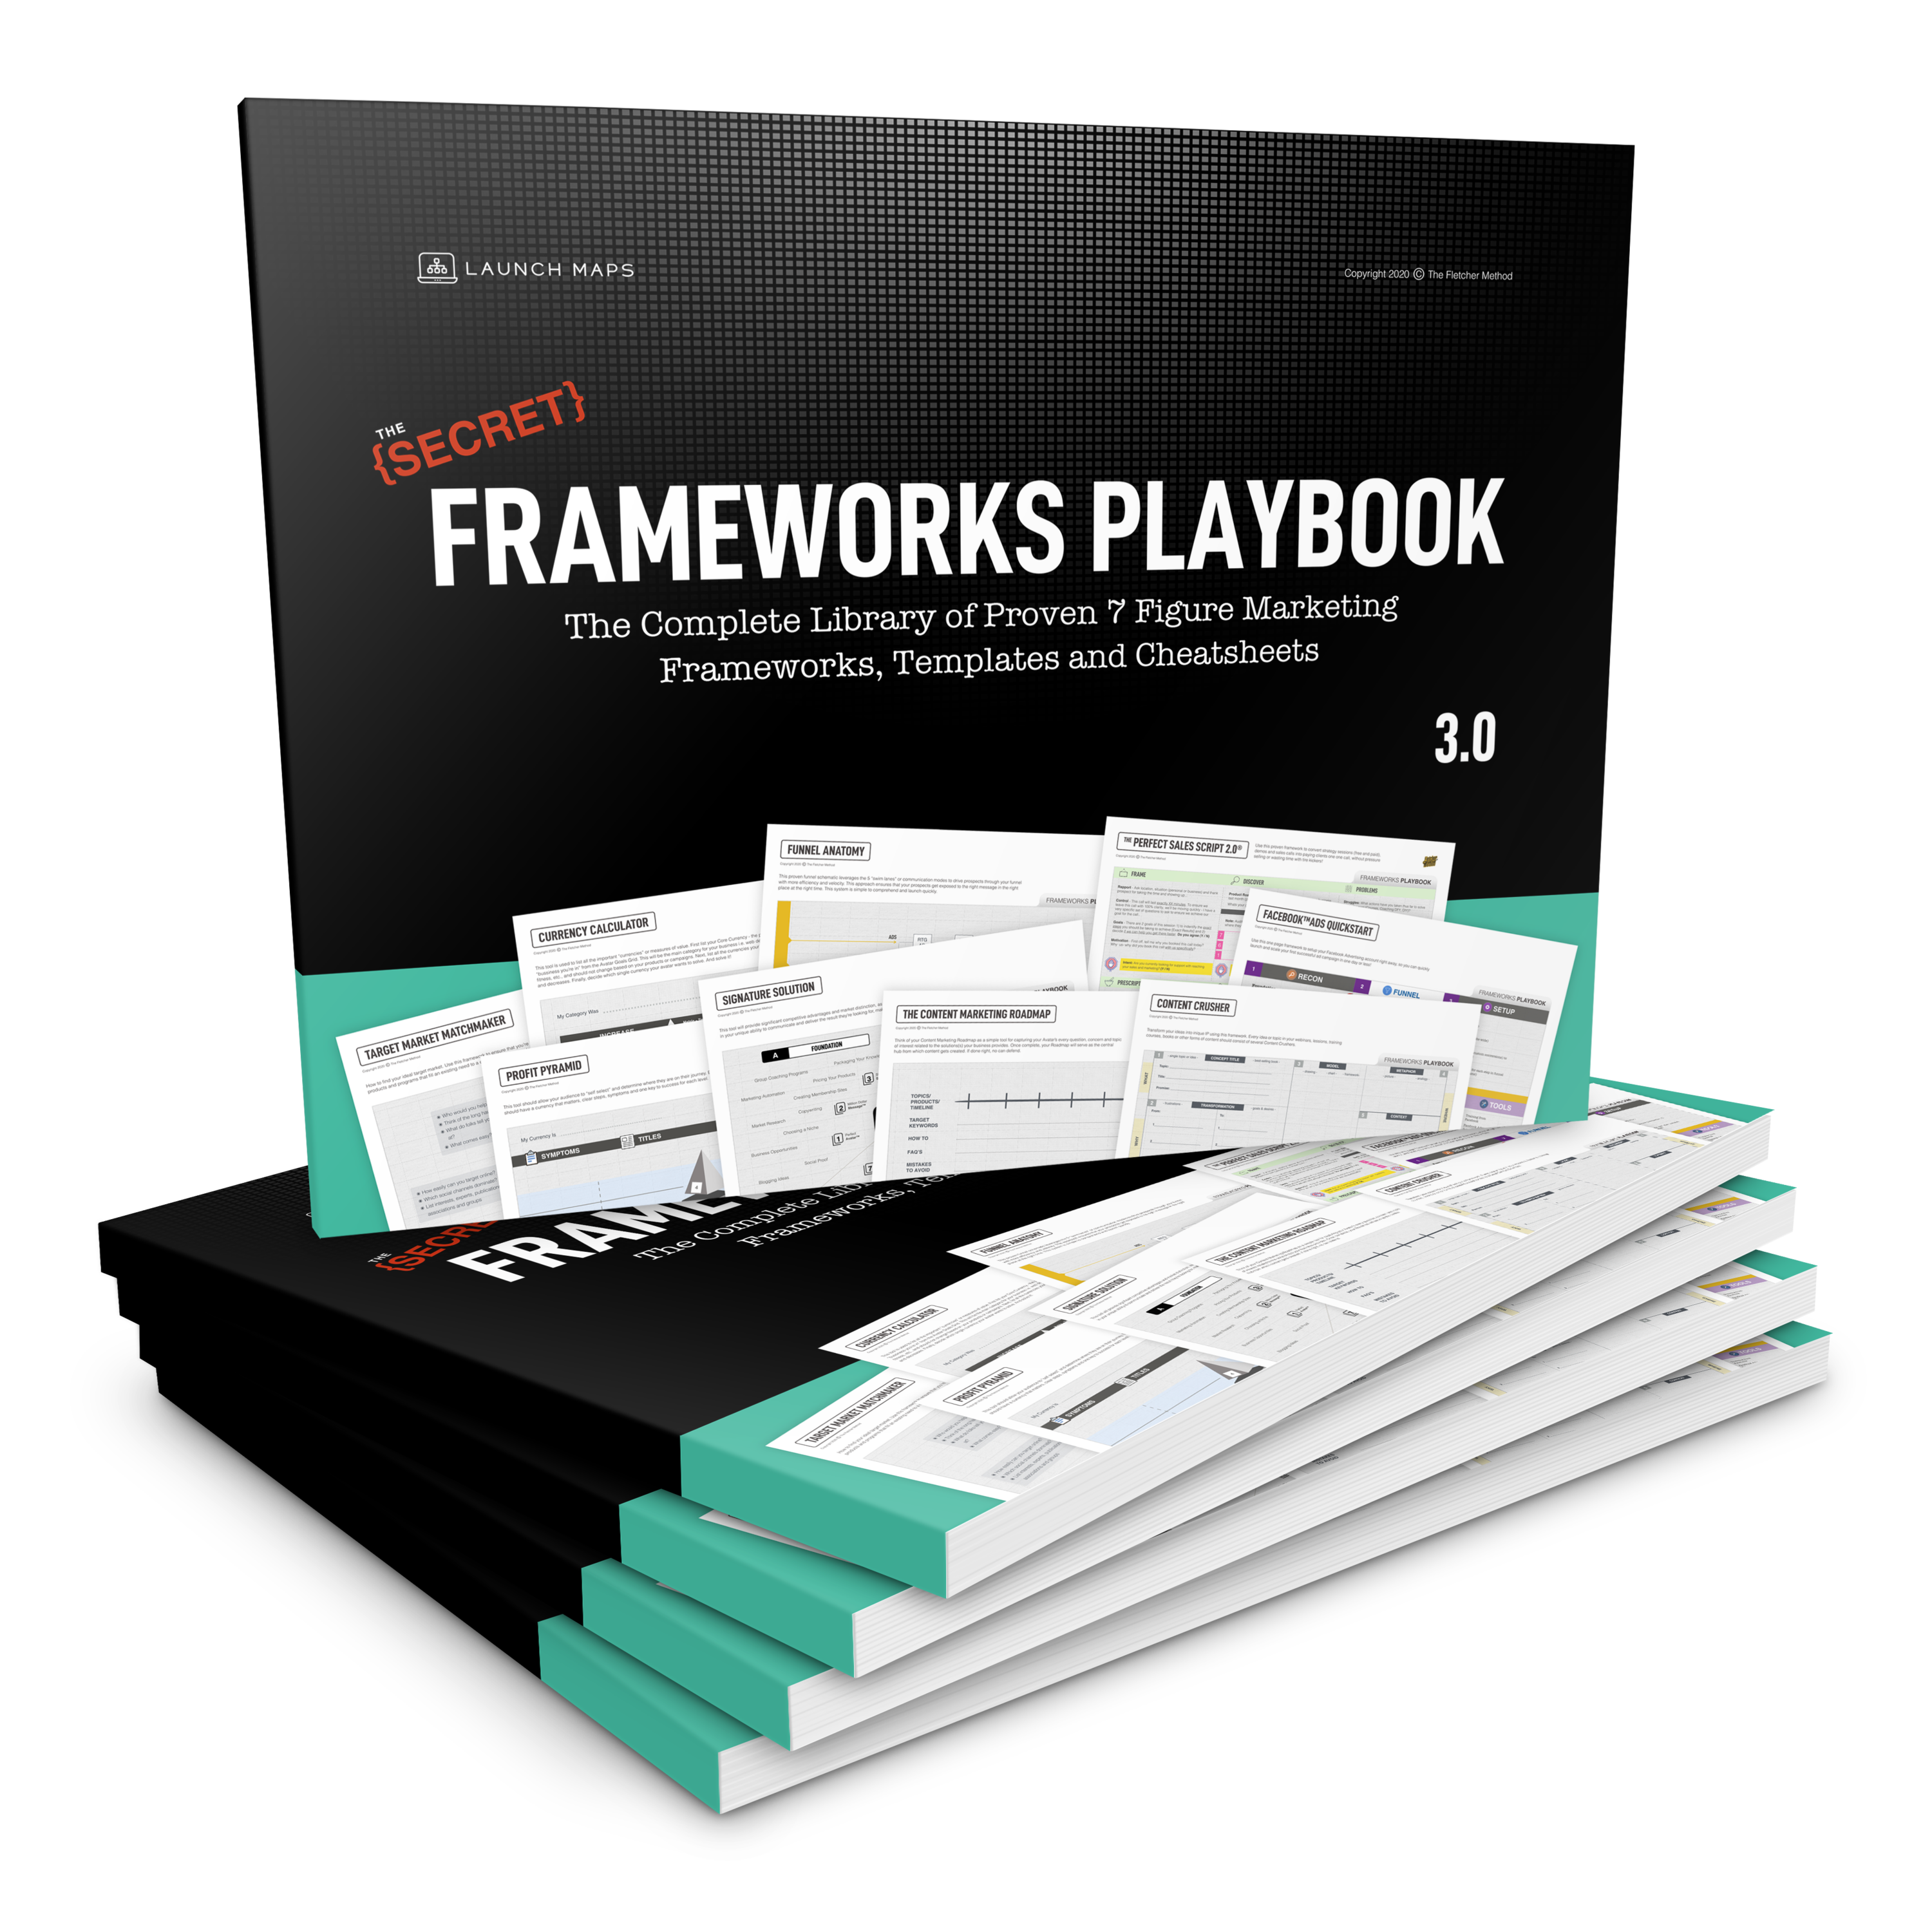 Aaron Fletcher - The Secret Frameworks Playbook 3.0